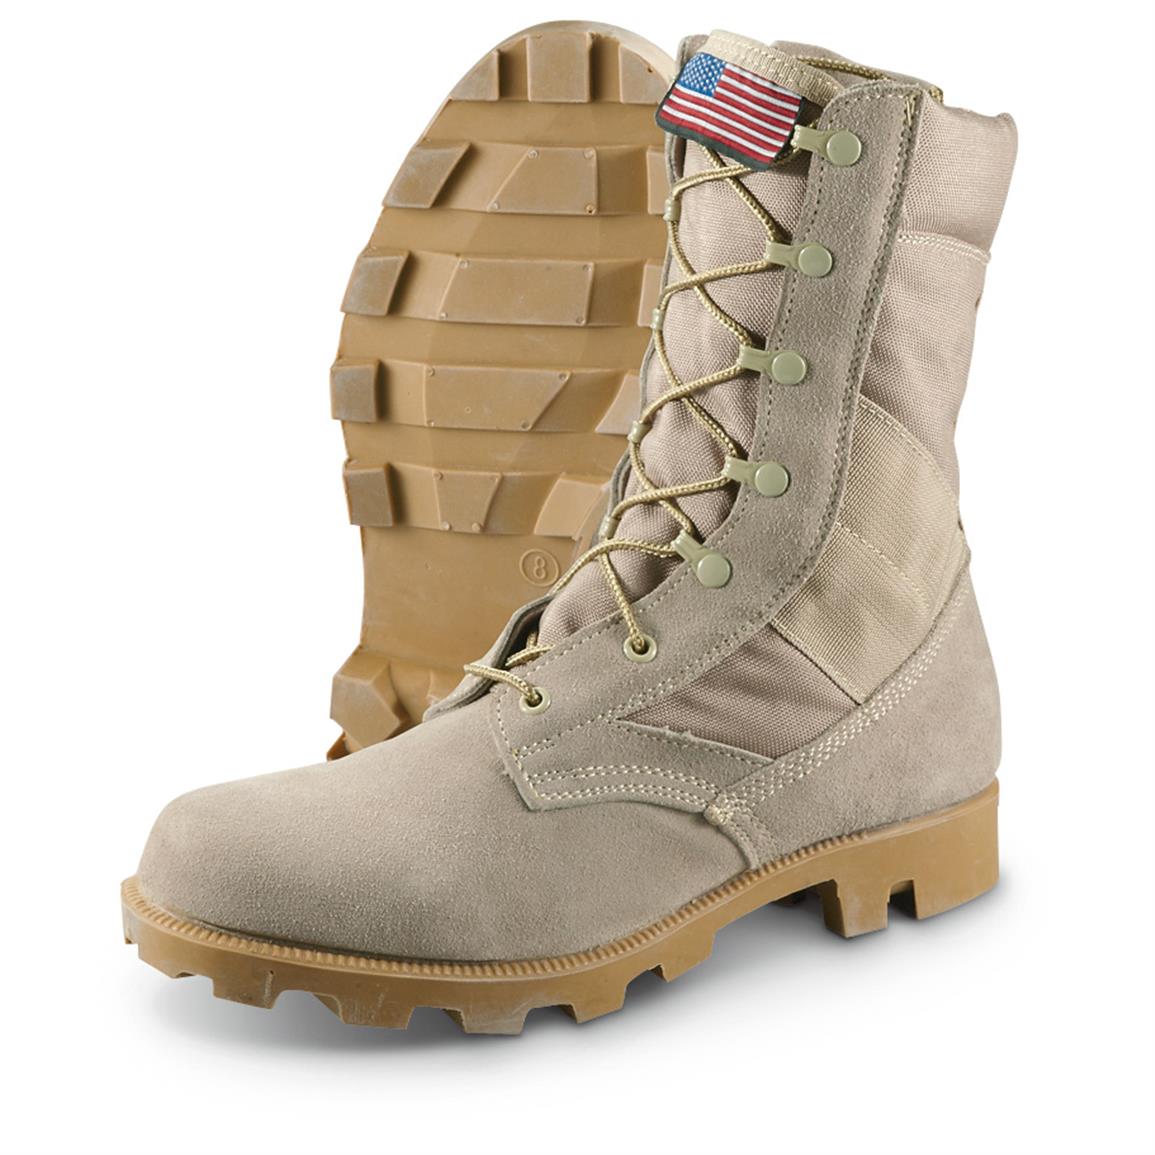 New U.S. Military Surplus Side-zip Desert Boots - 622849, Combat & Tactical Boots at Sportsman's 